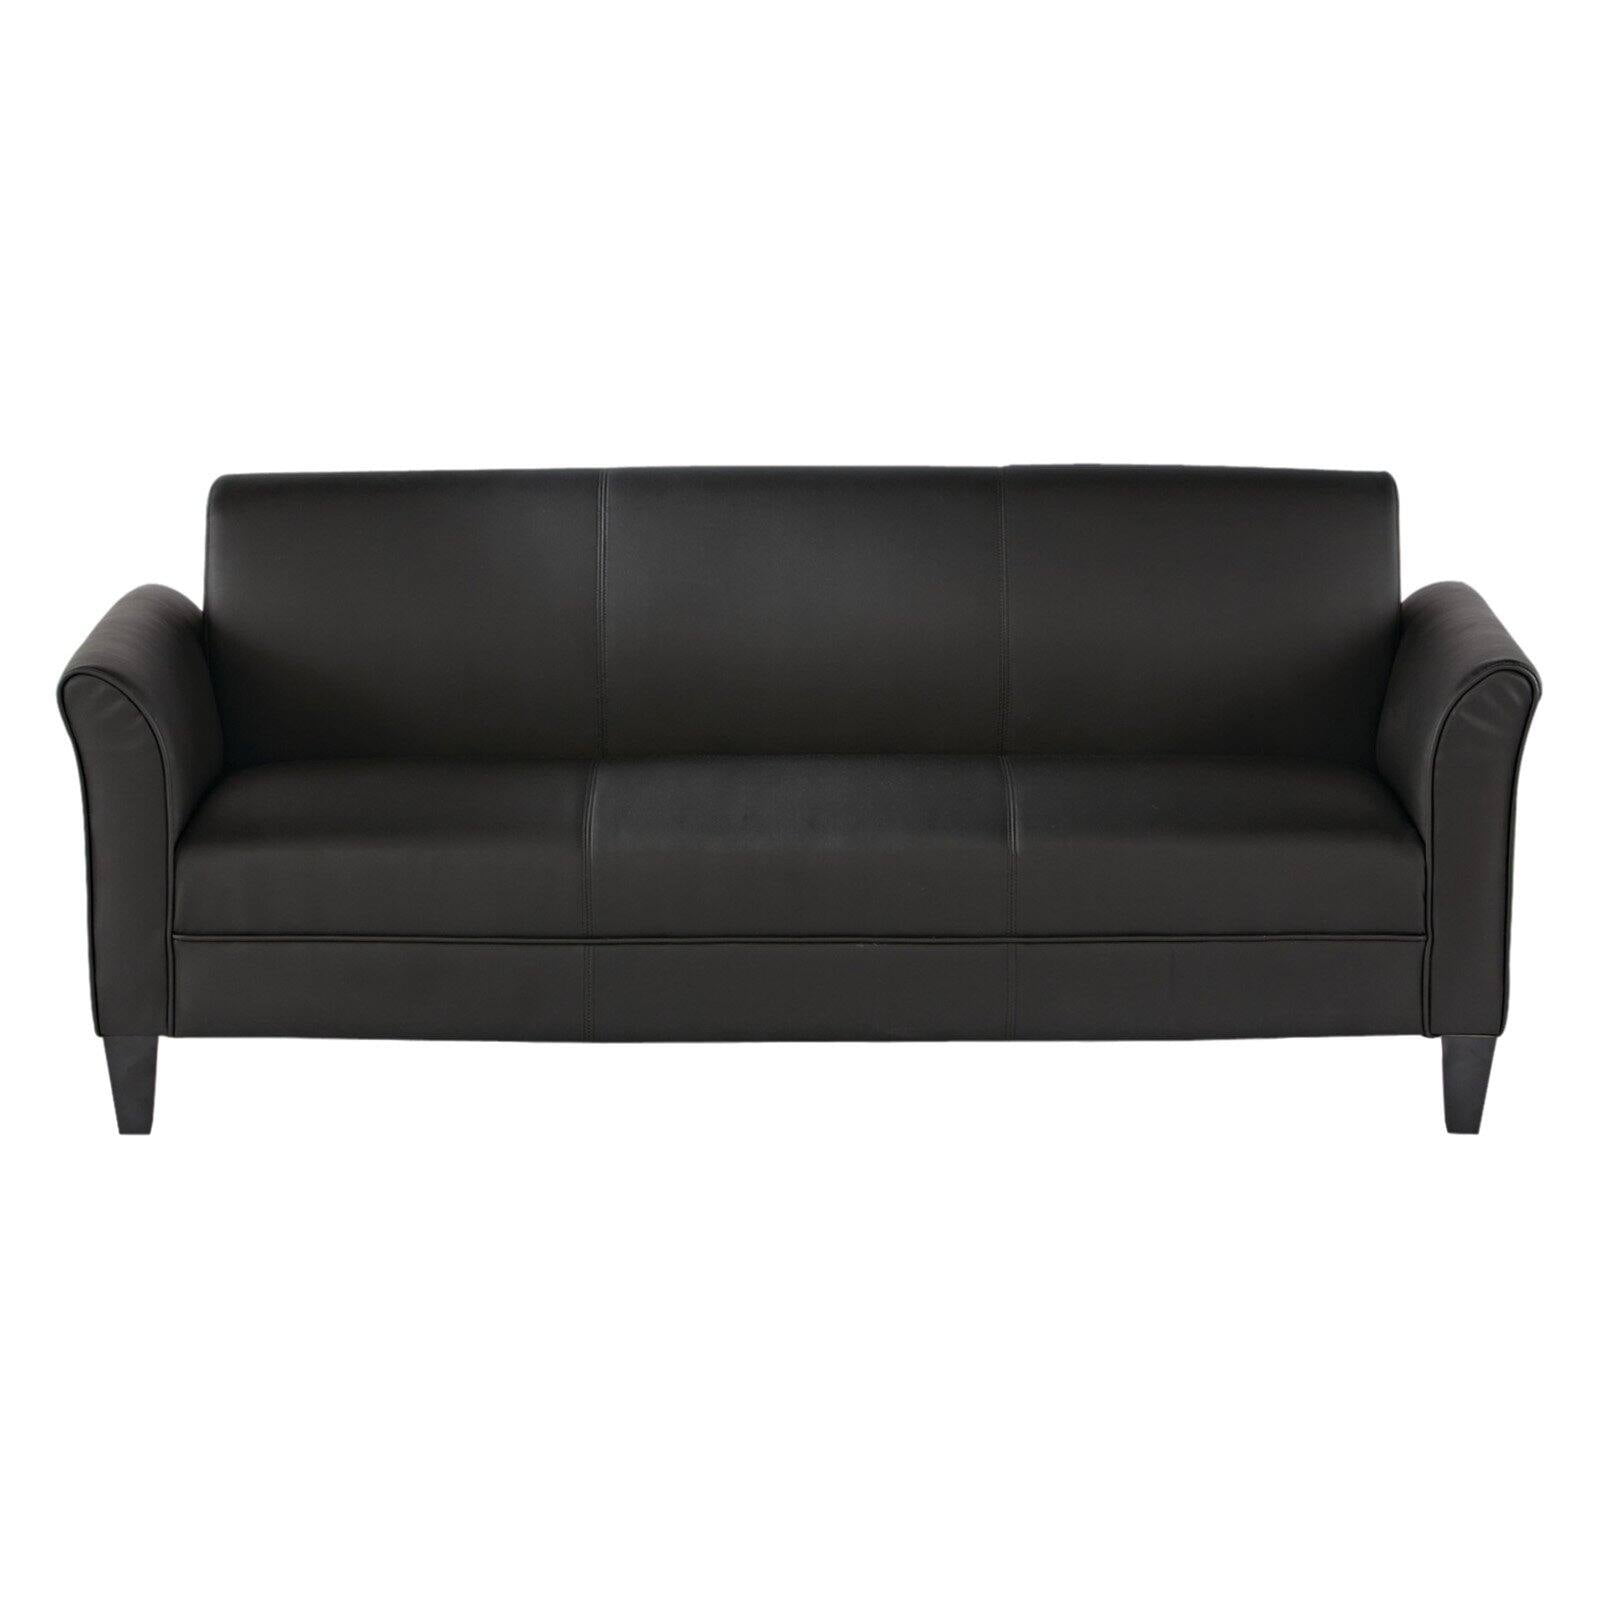 Rl4351m for sale online Alera Reception Lounge Series Guest Chair 